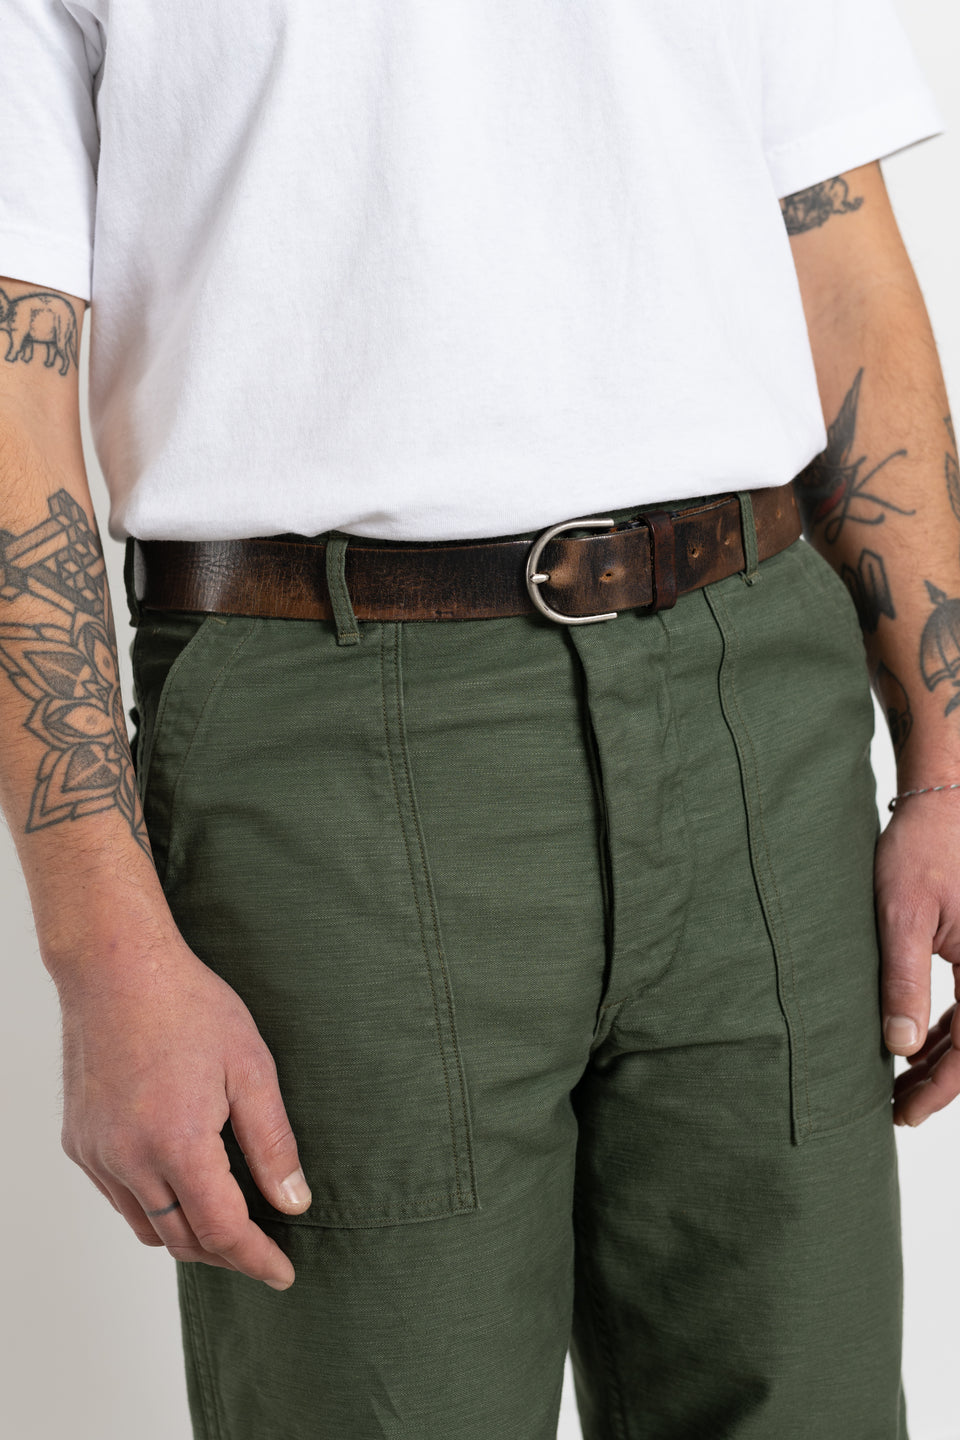 Vintage Military 4 Pocket Fatigue Pant